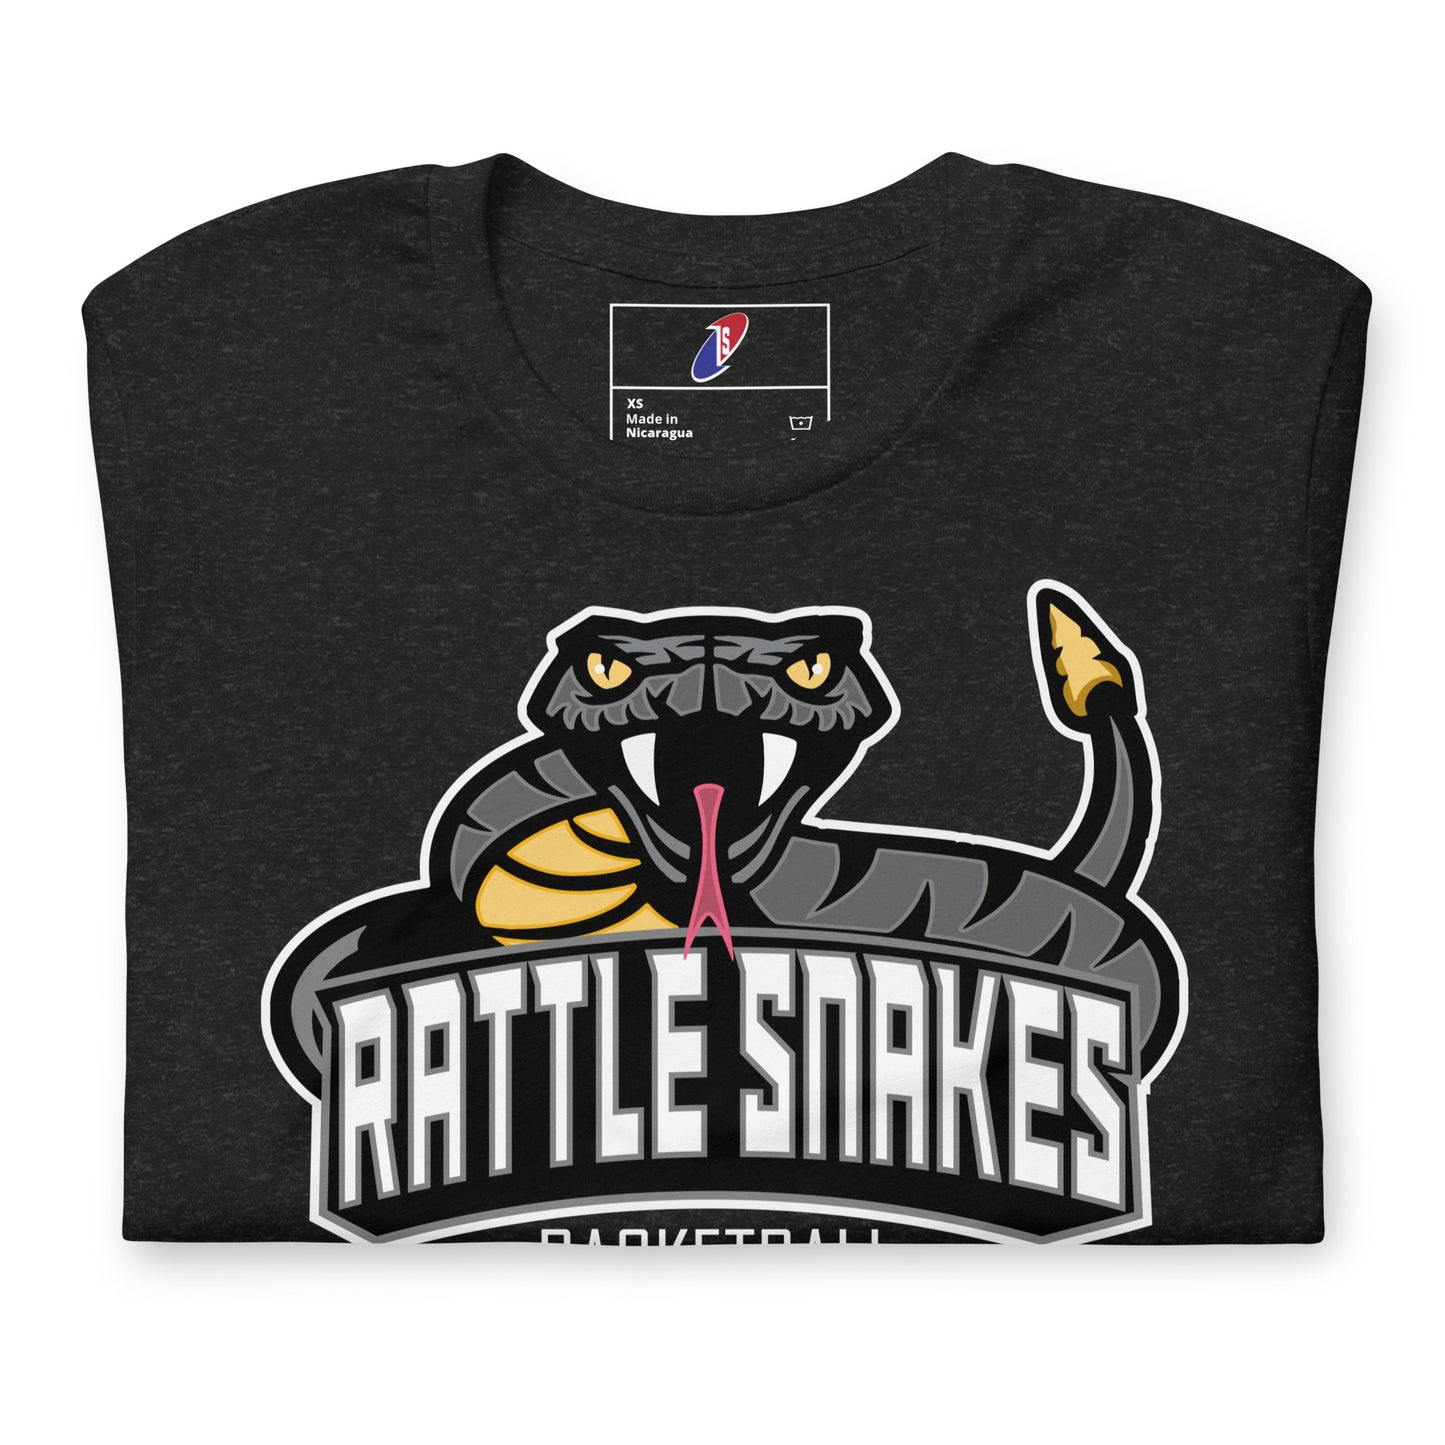 Rattle Snakes Unisex t-shirt